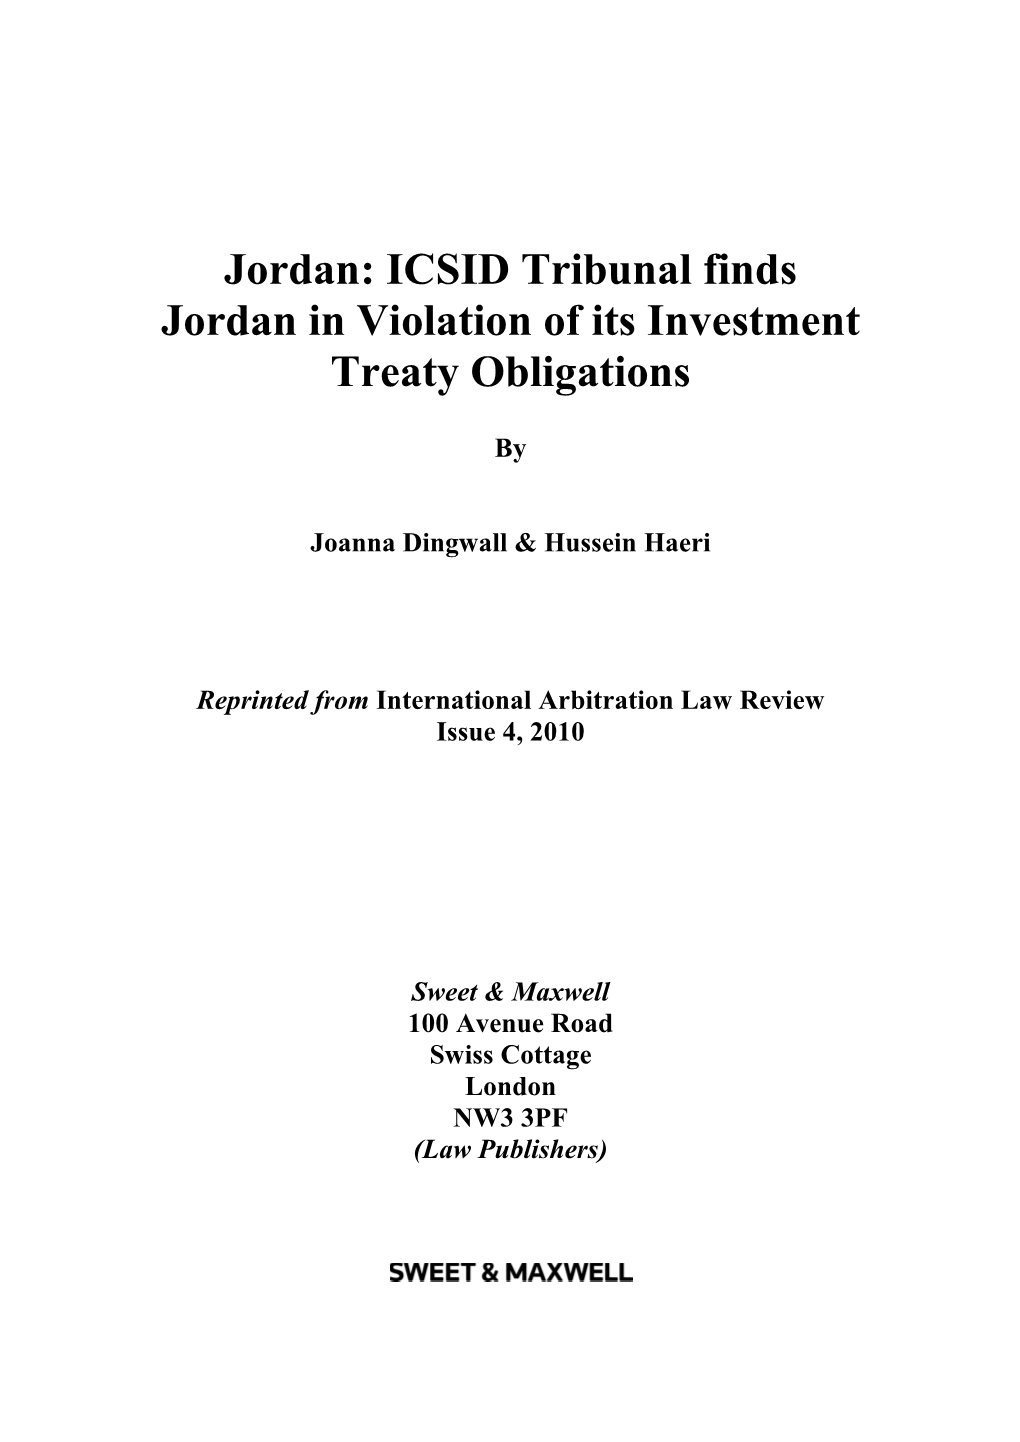 Jordan: ICSID Tribunal Finds Jordan in Violation of Its Investment Treaty Obligations